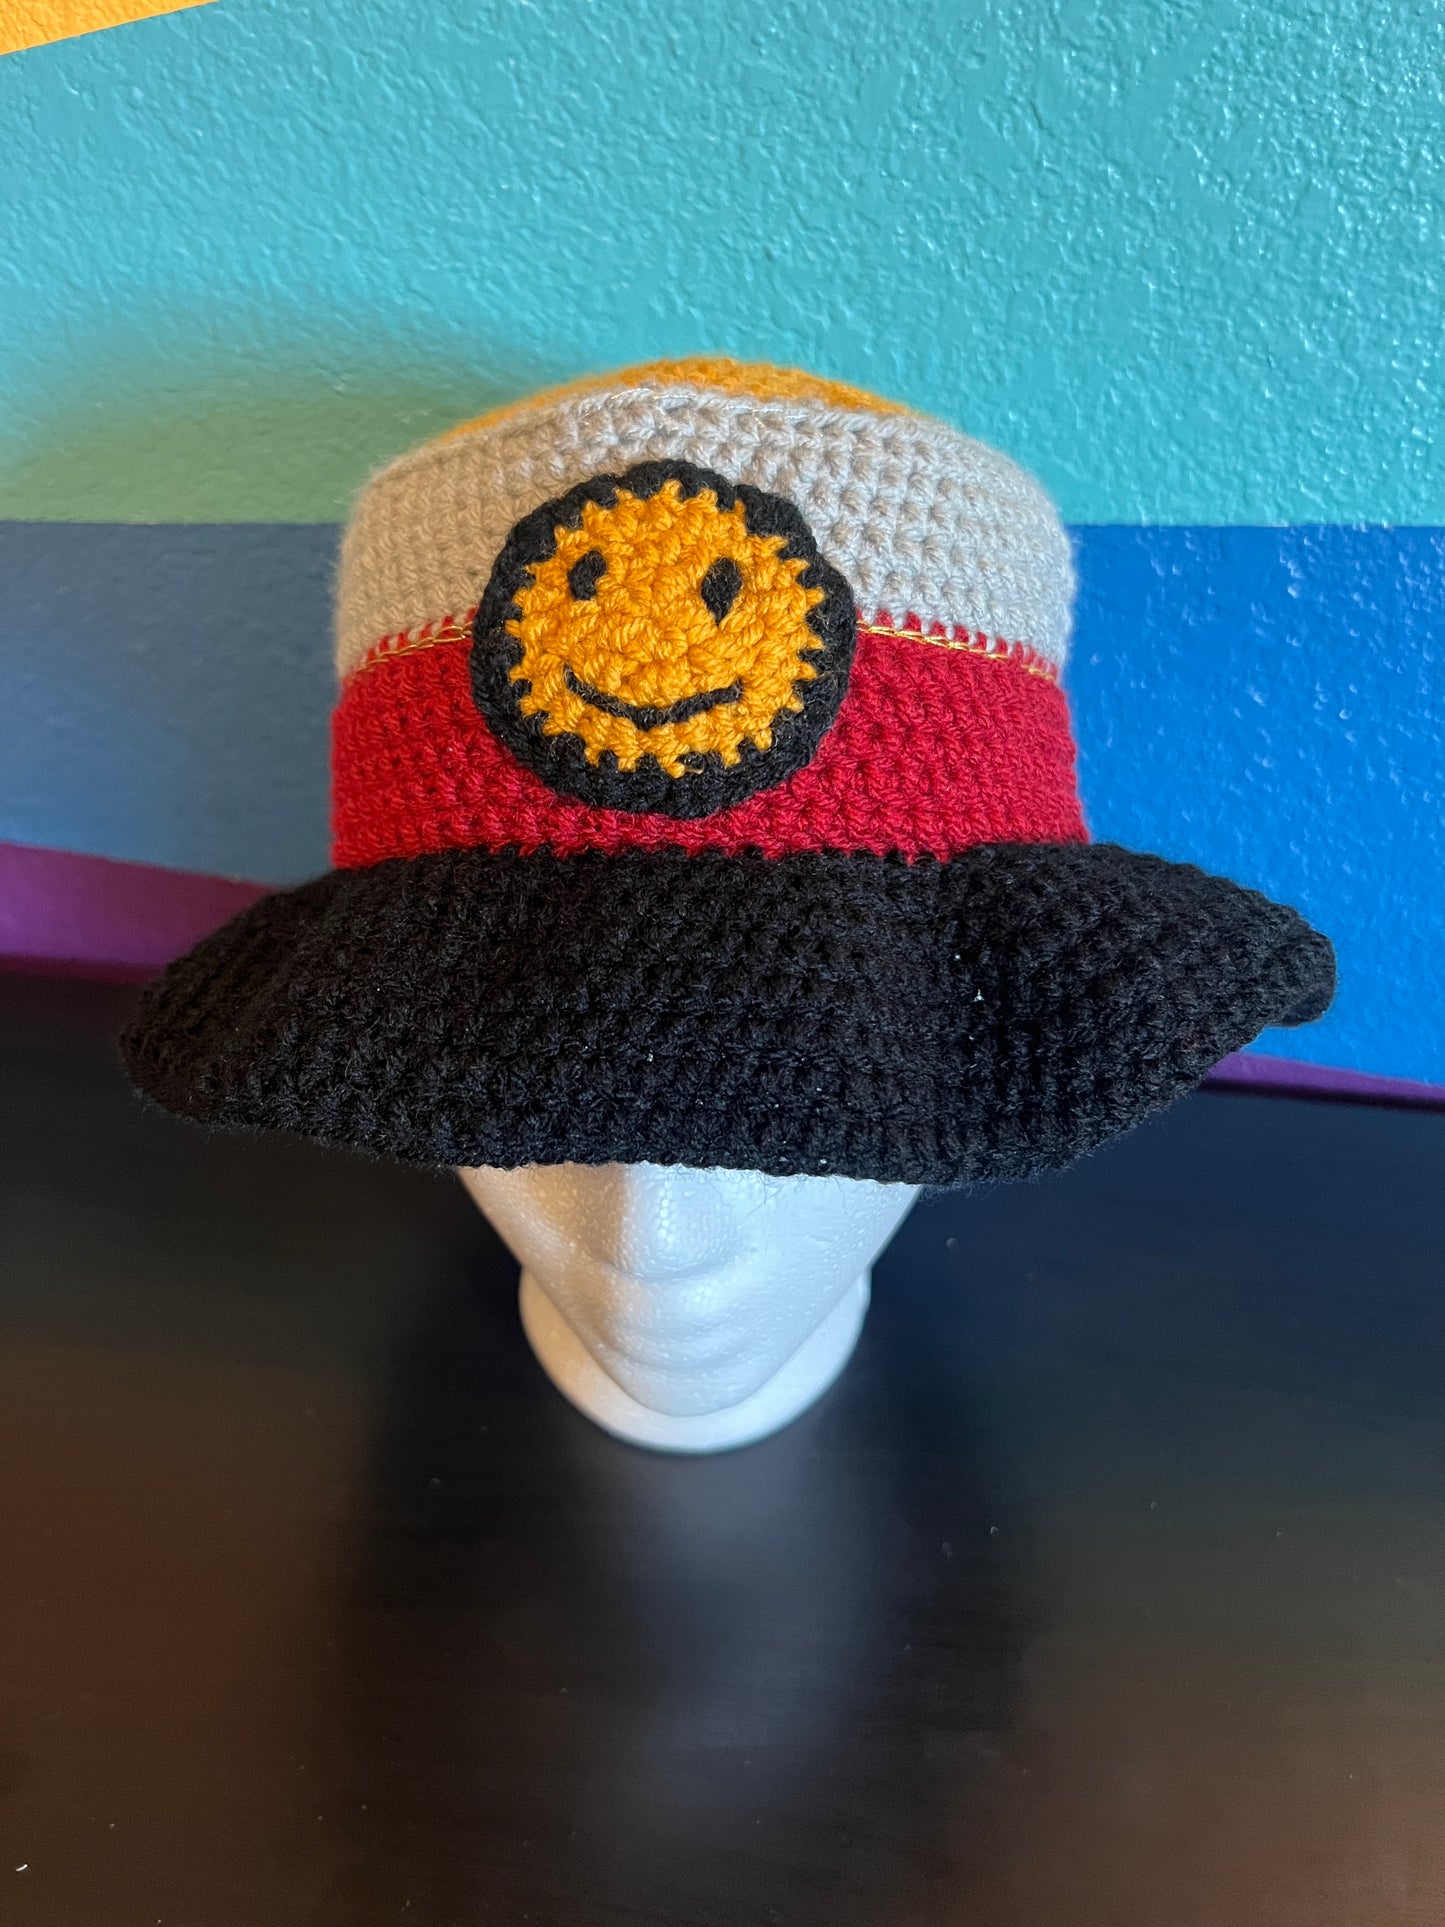 Crochet bucket hats